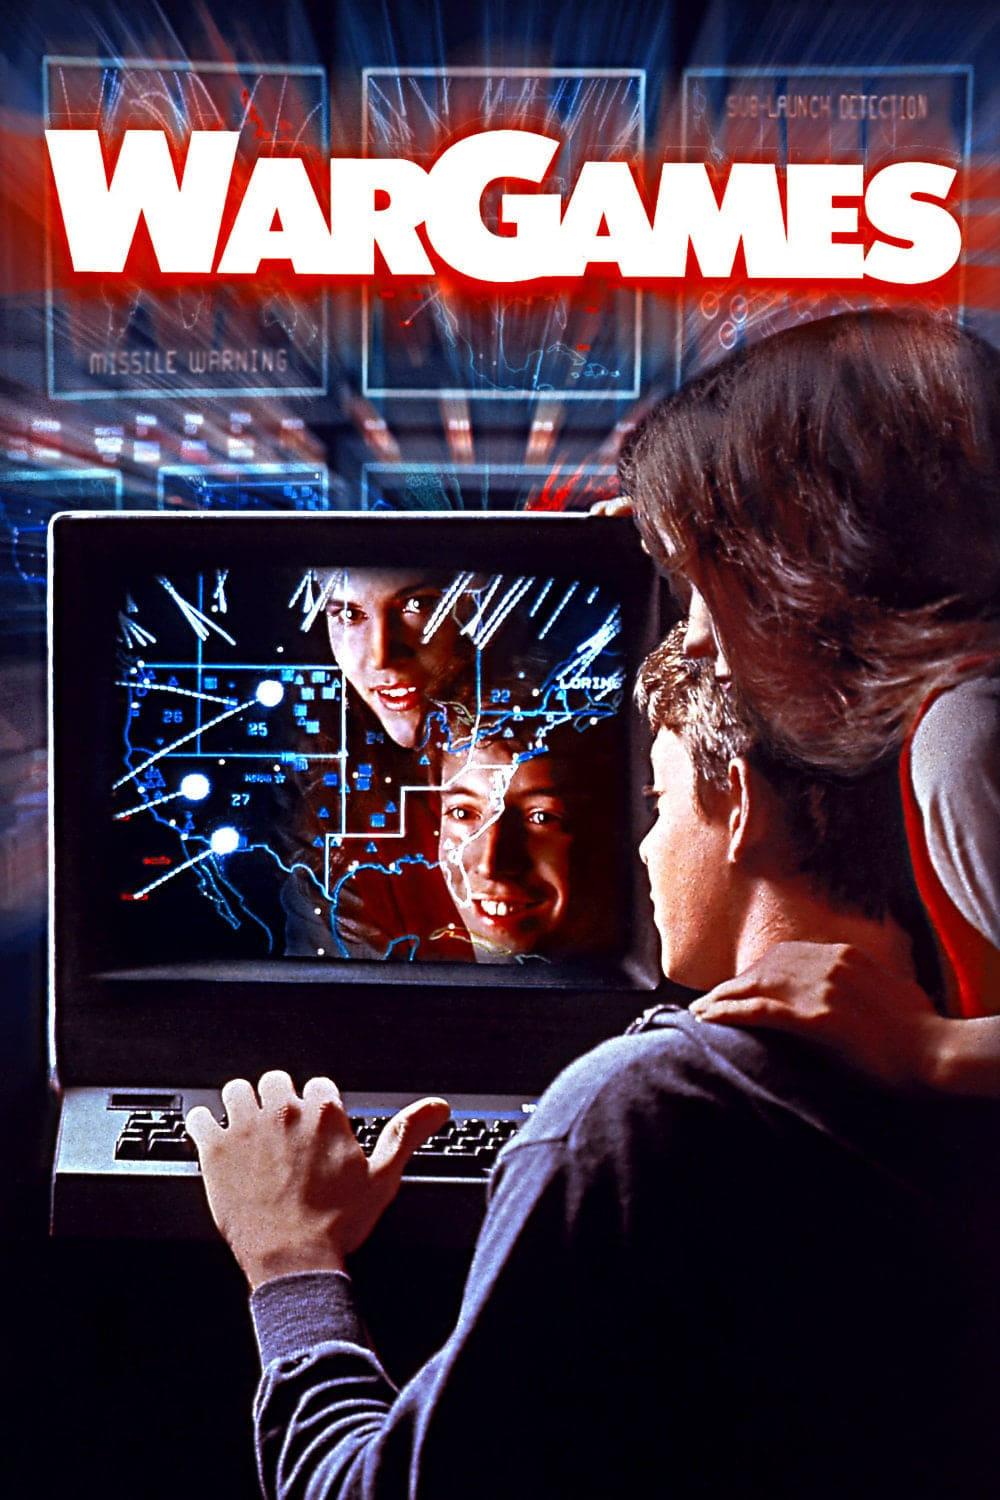 WarGames poster